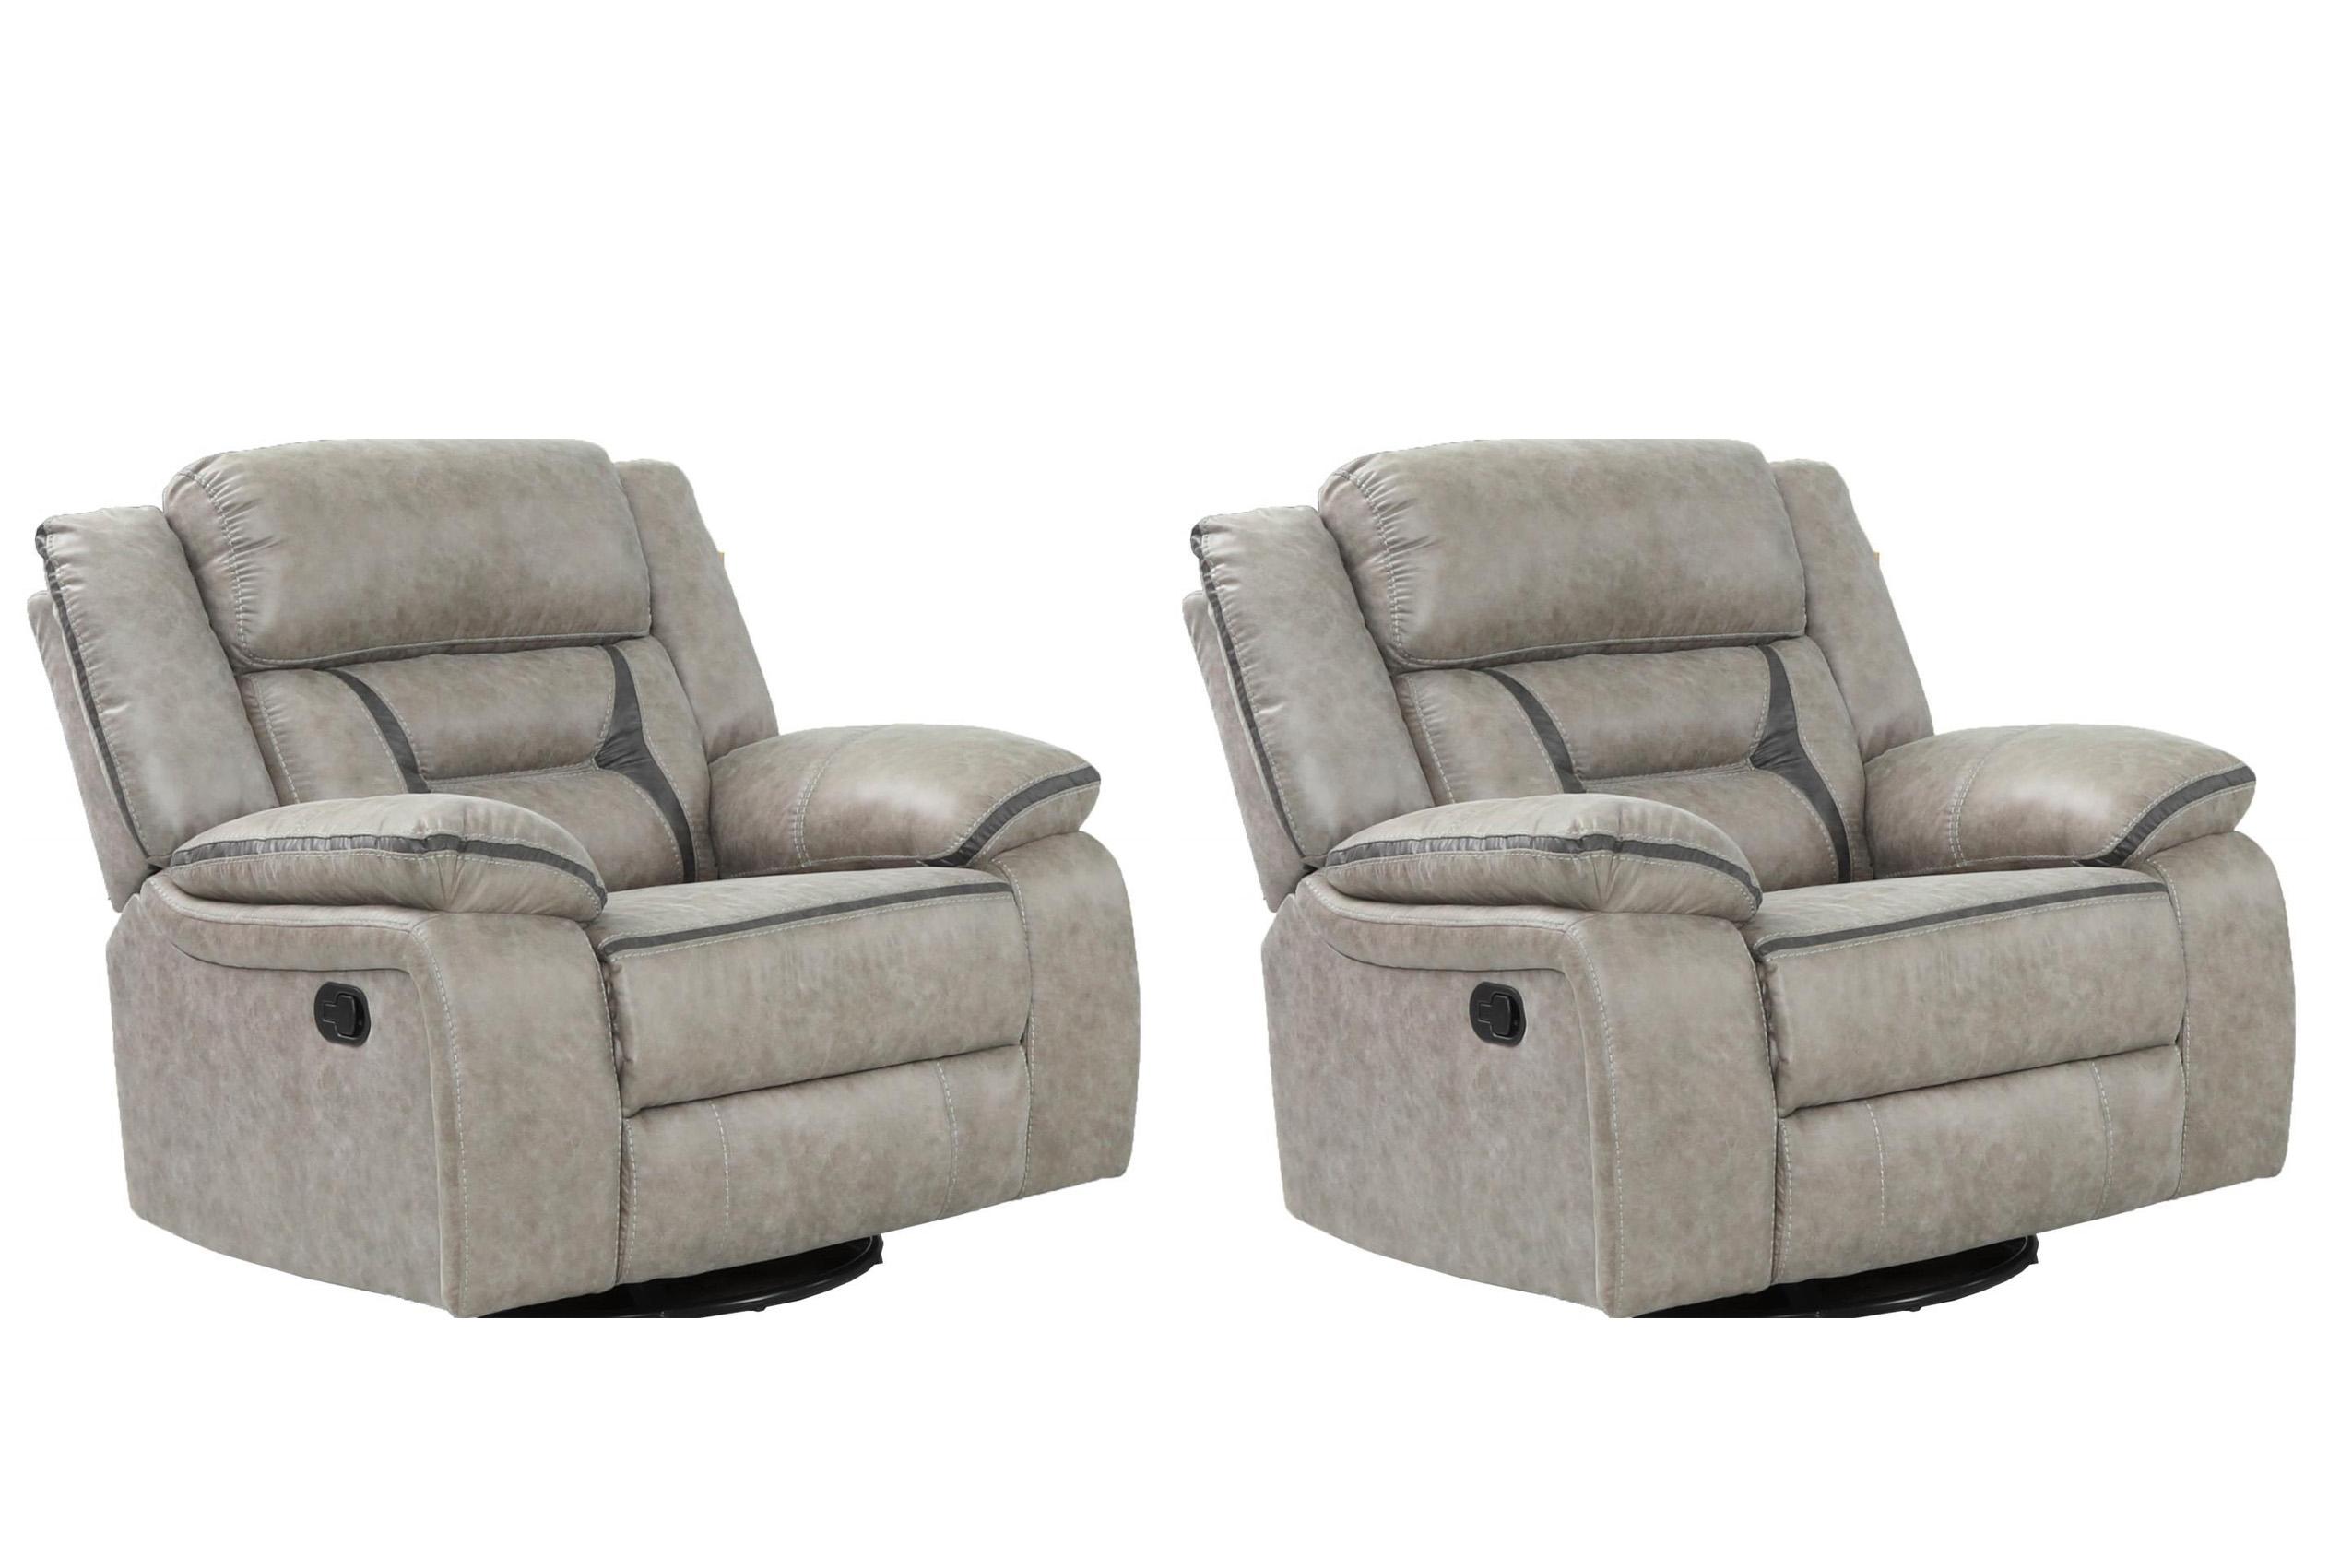 Contemporary, Modern Recliner Chair Set DENALI DENALI-CH-Set-2 in Gray Faux Leather